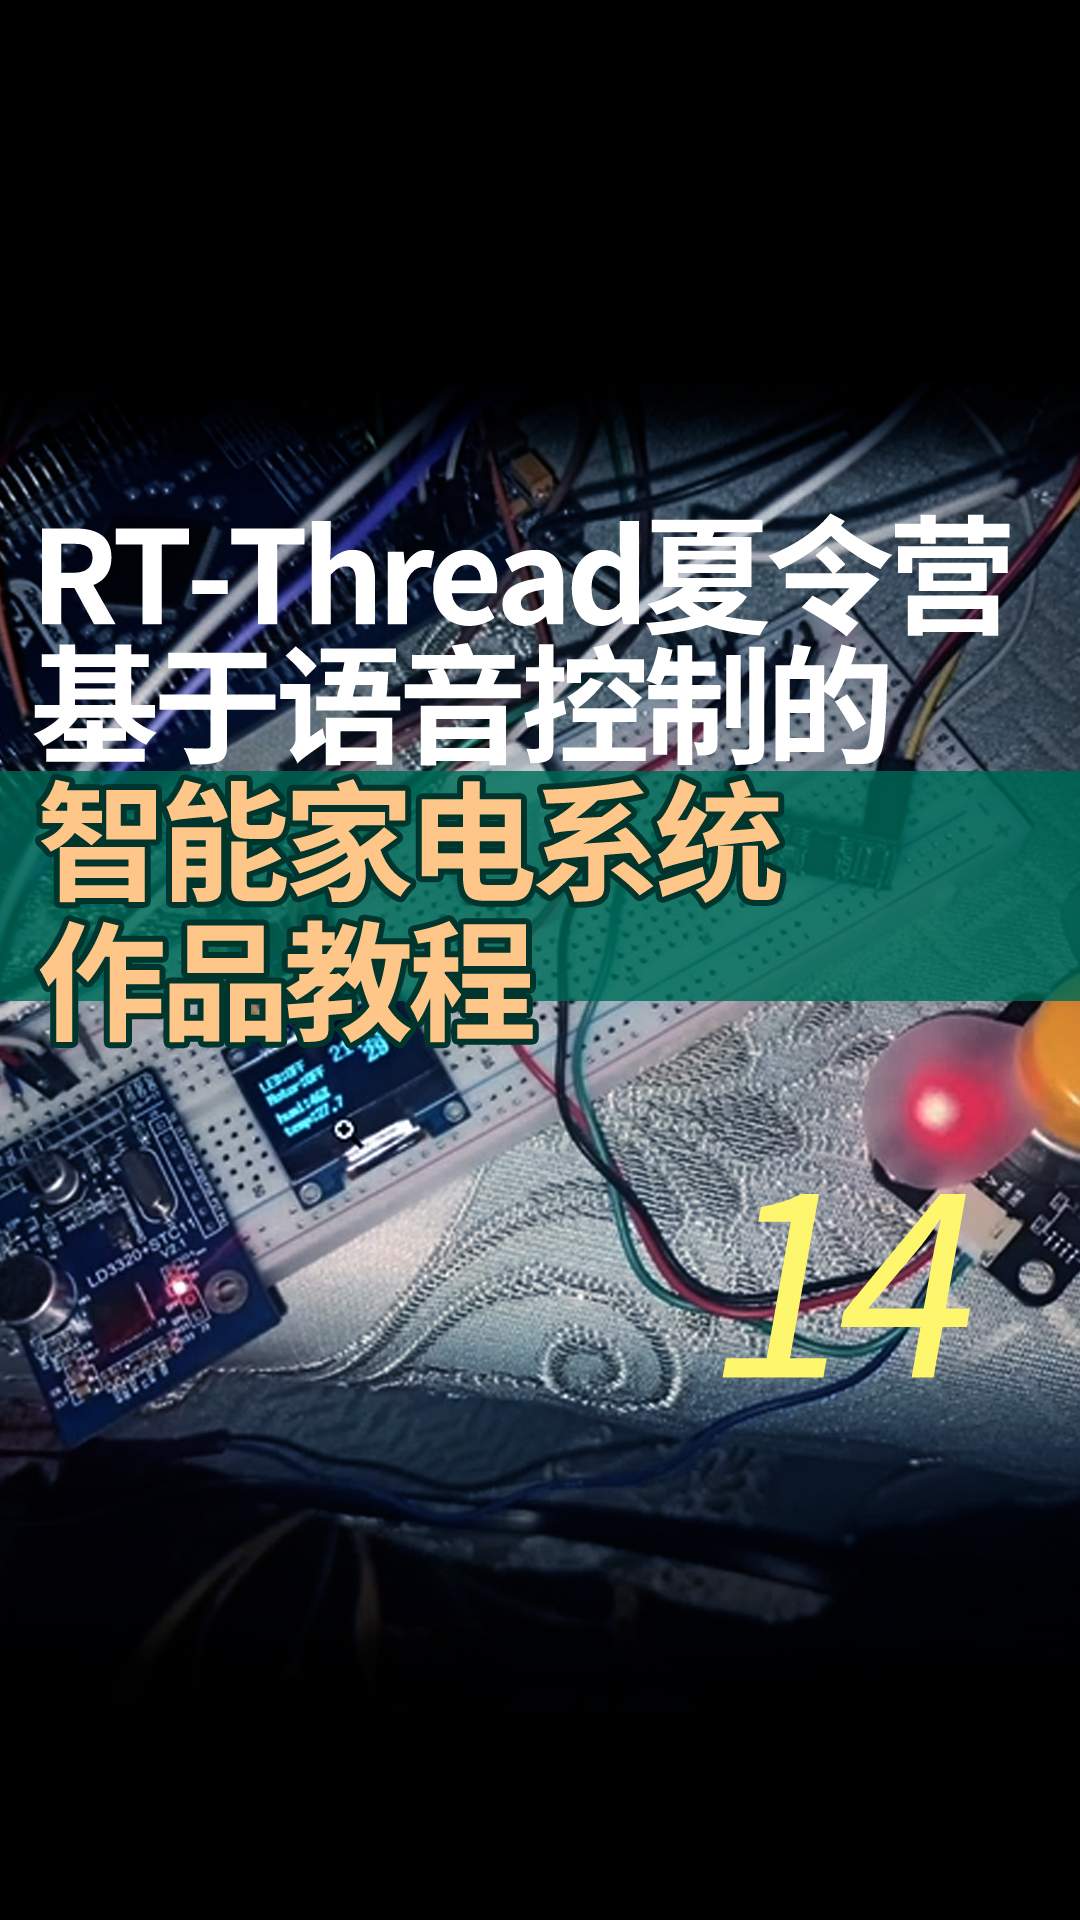 RT-Thread夏令营基于语音控制的智能家电系统作品教程14 dht22演示